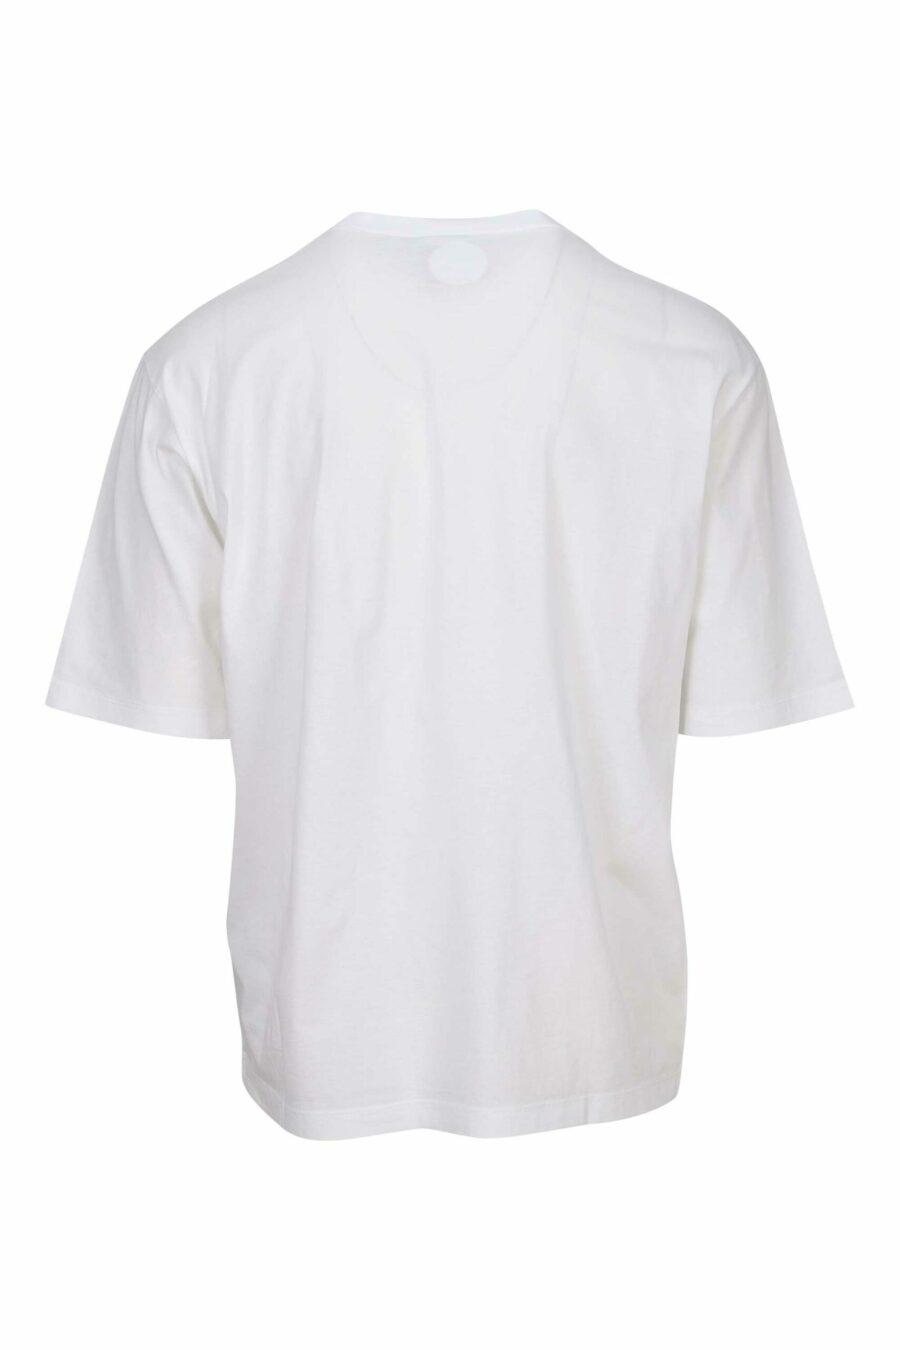 Camiseta blanca "oversize" con logo tarjeta de crédito bajo - 8054148265540 1 scaled